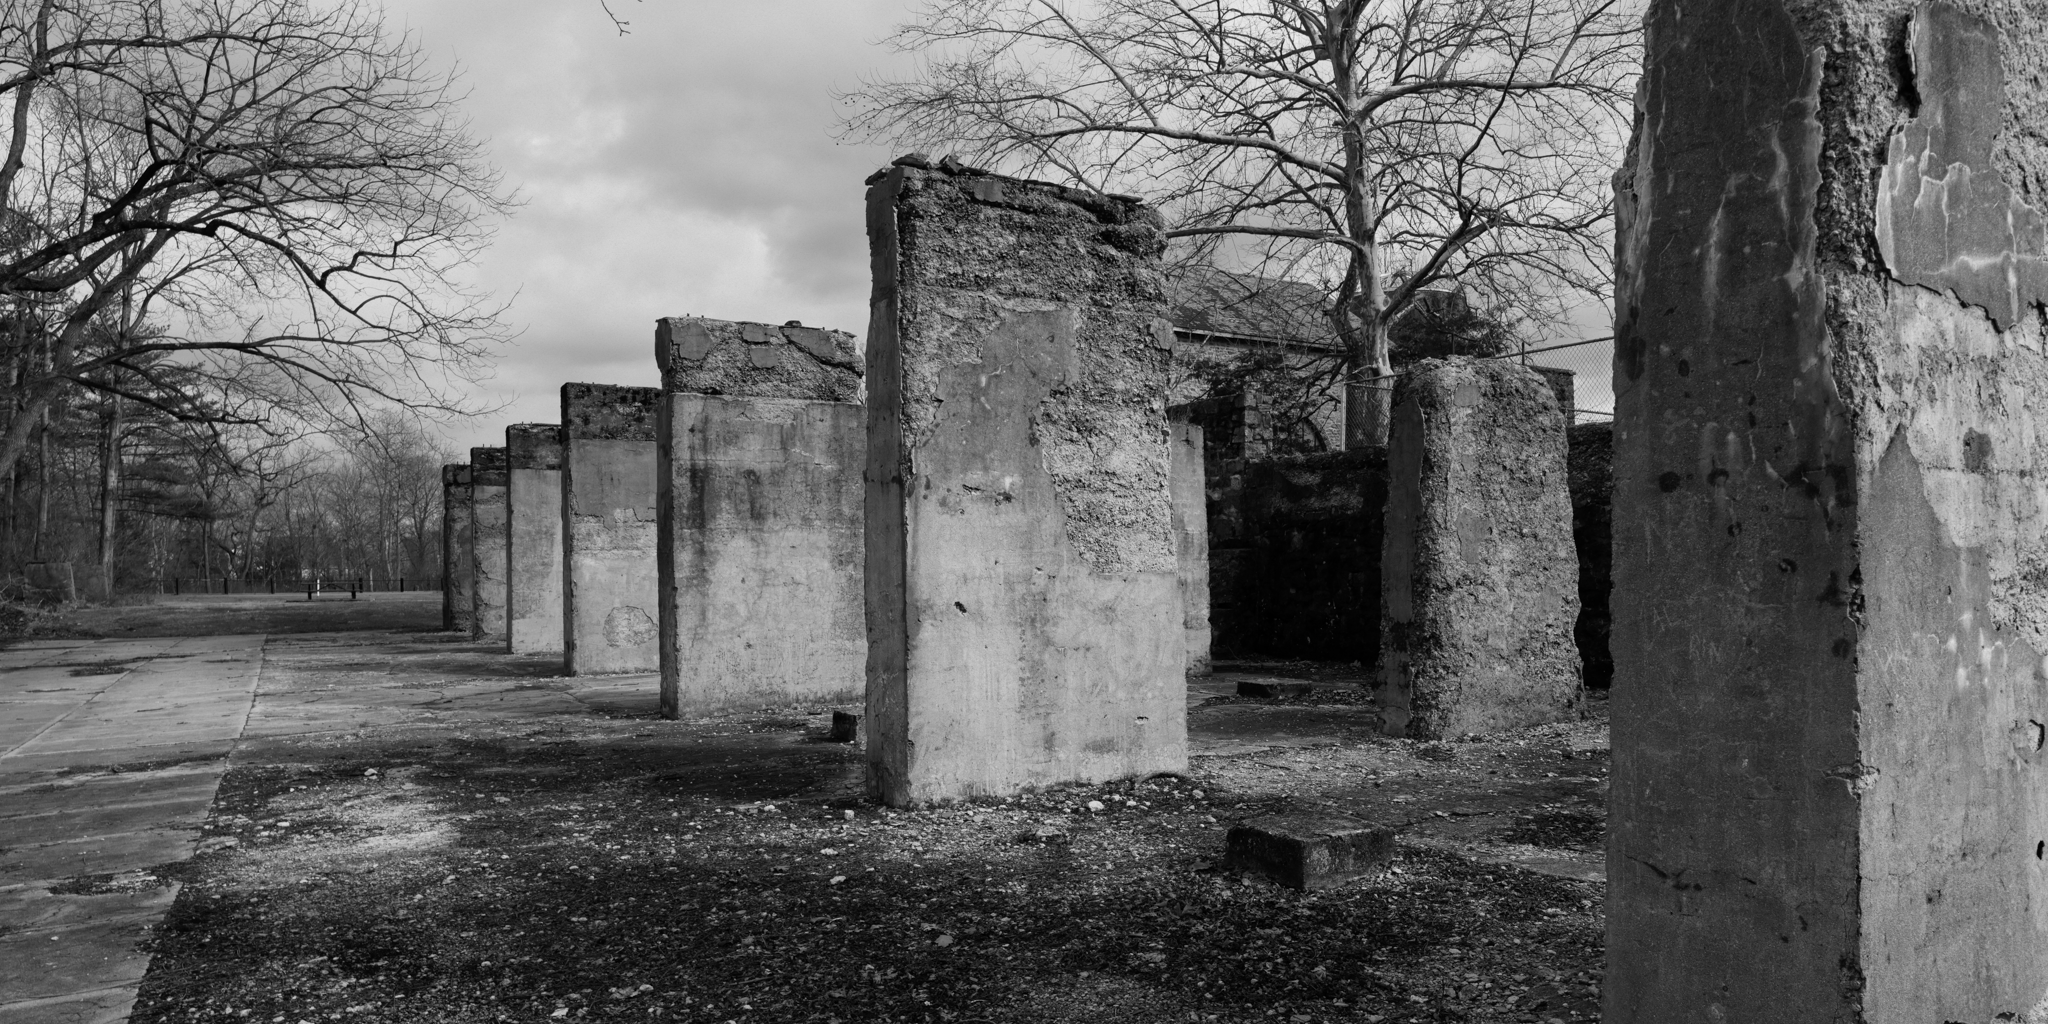  Monoliths at the remains of Lockridge Furnace in Alburtis, Pennsylvania. 